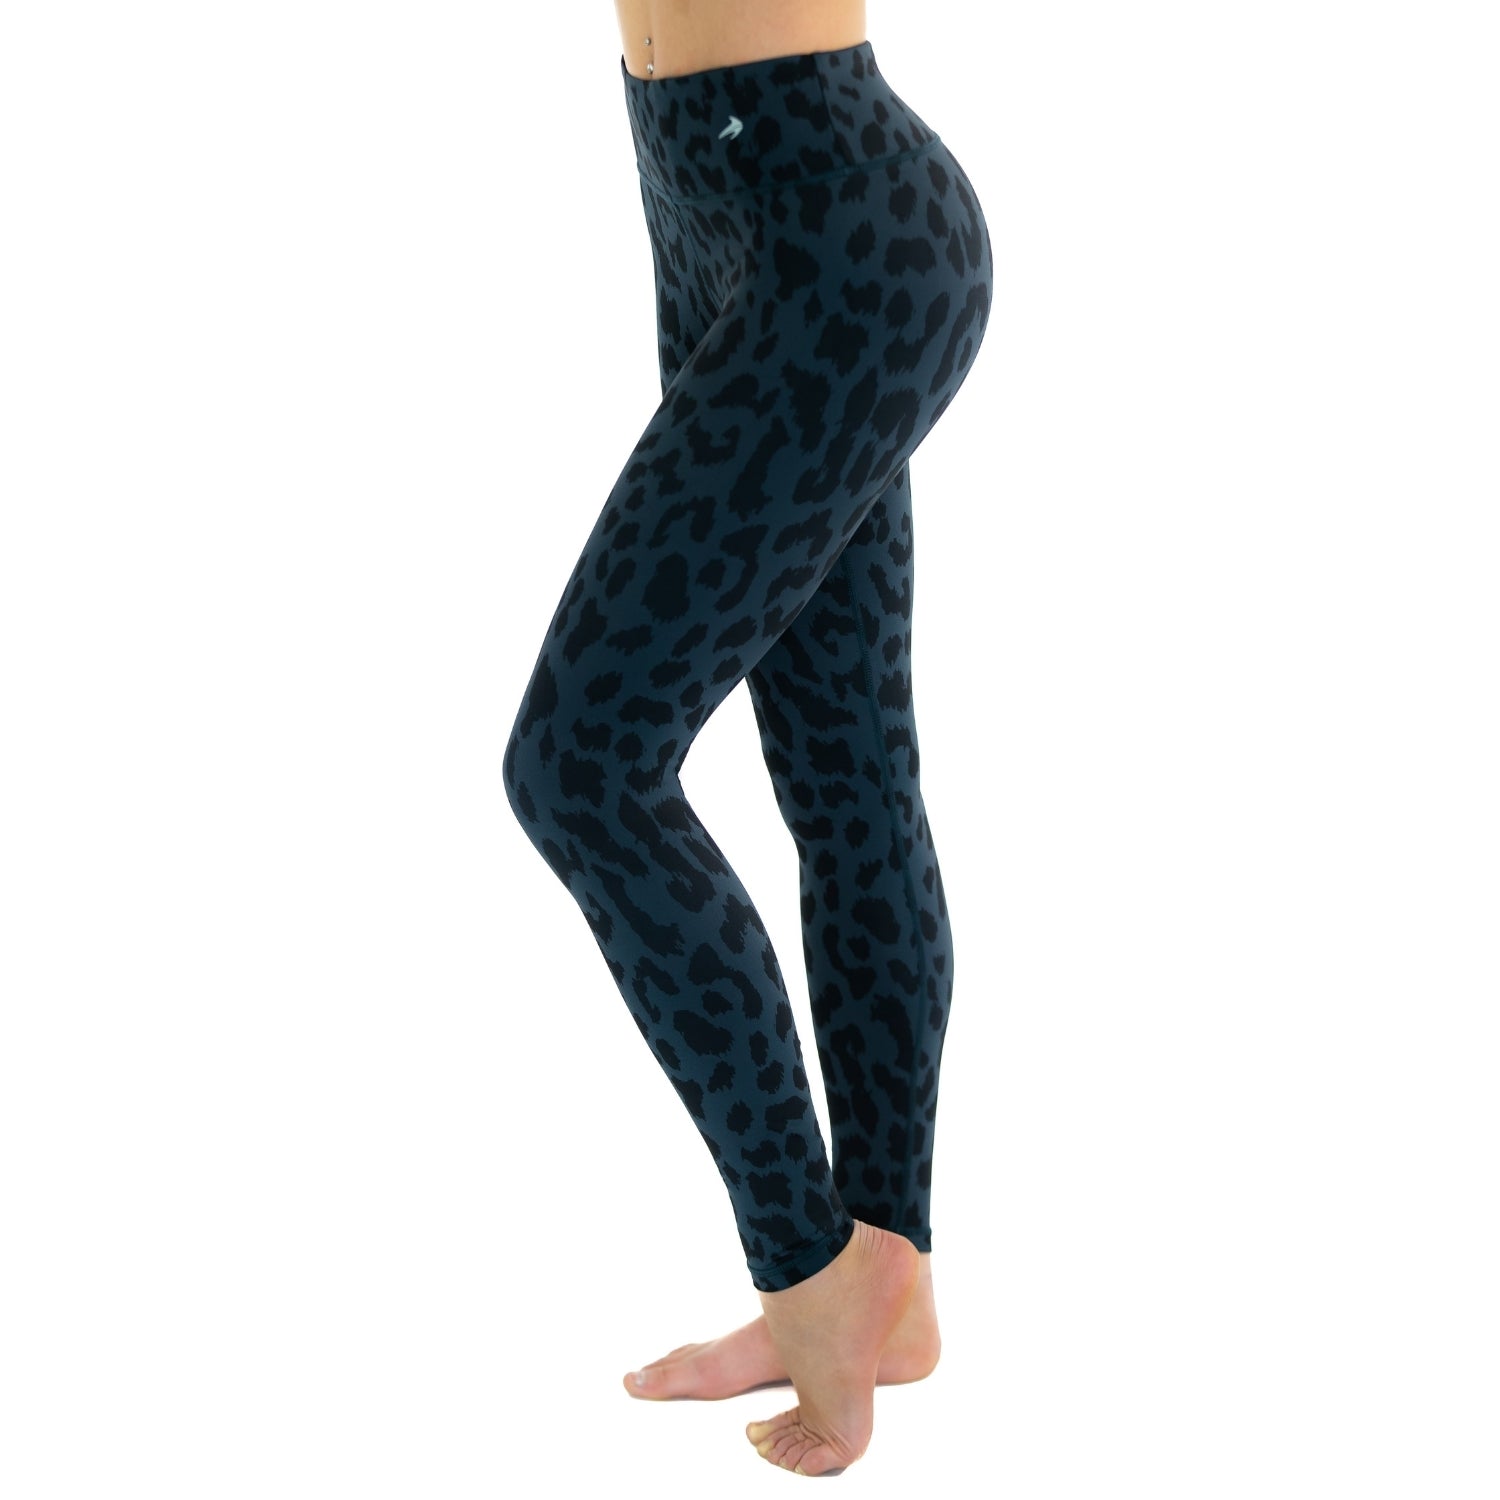 Women's Compression Leggings Super High Waist - Leopard Black